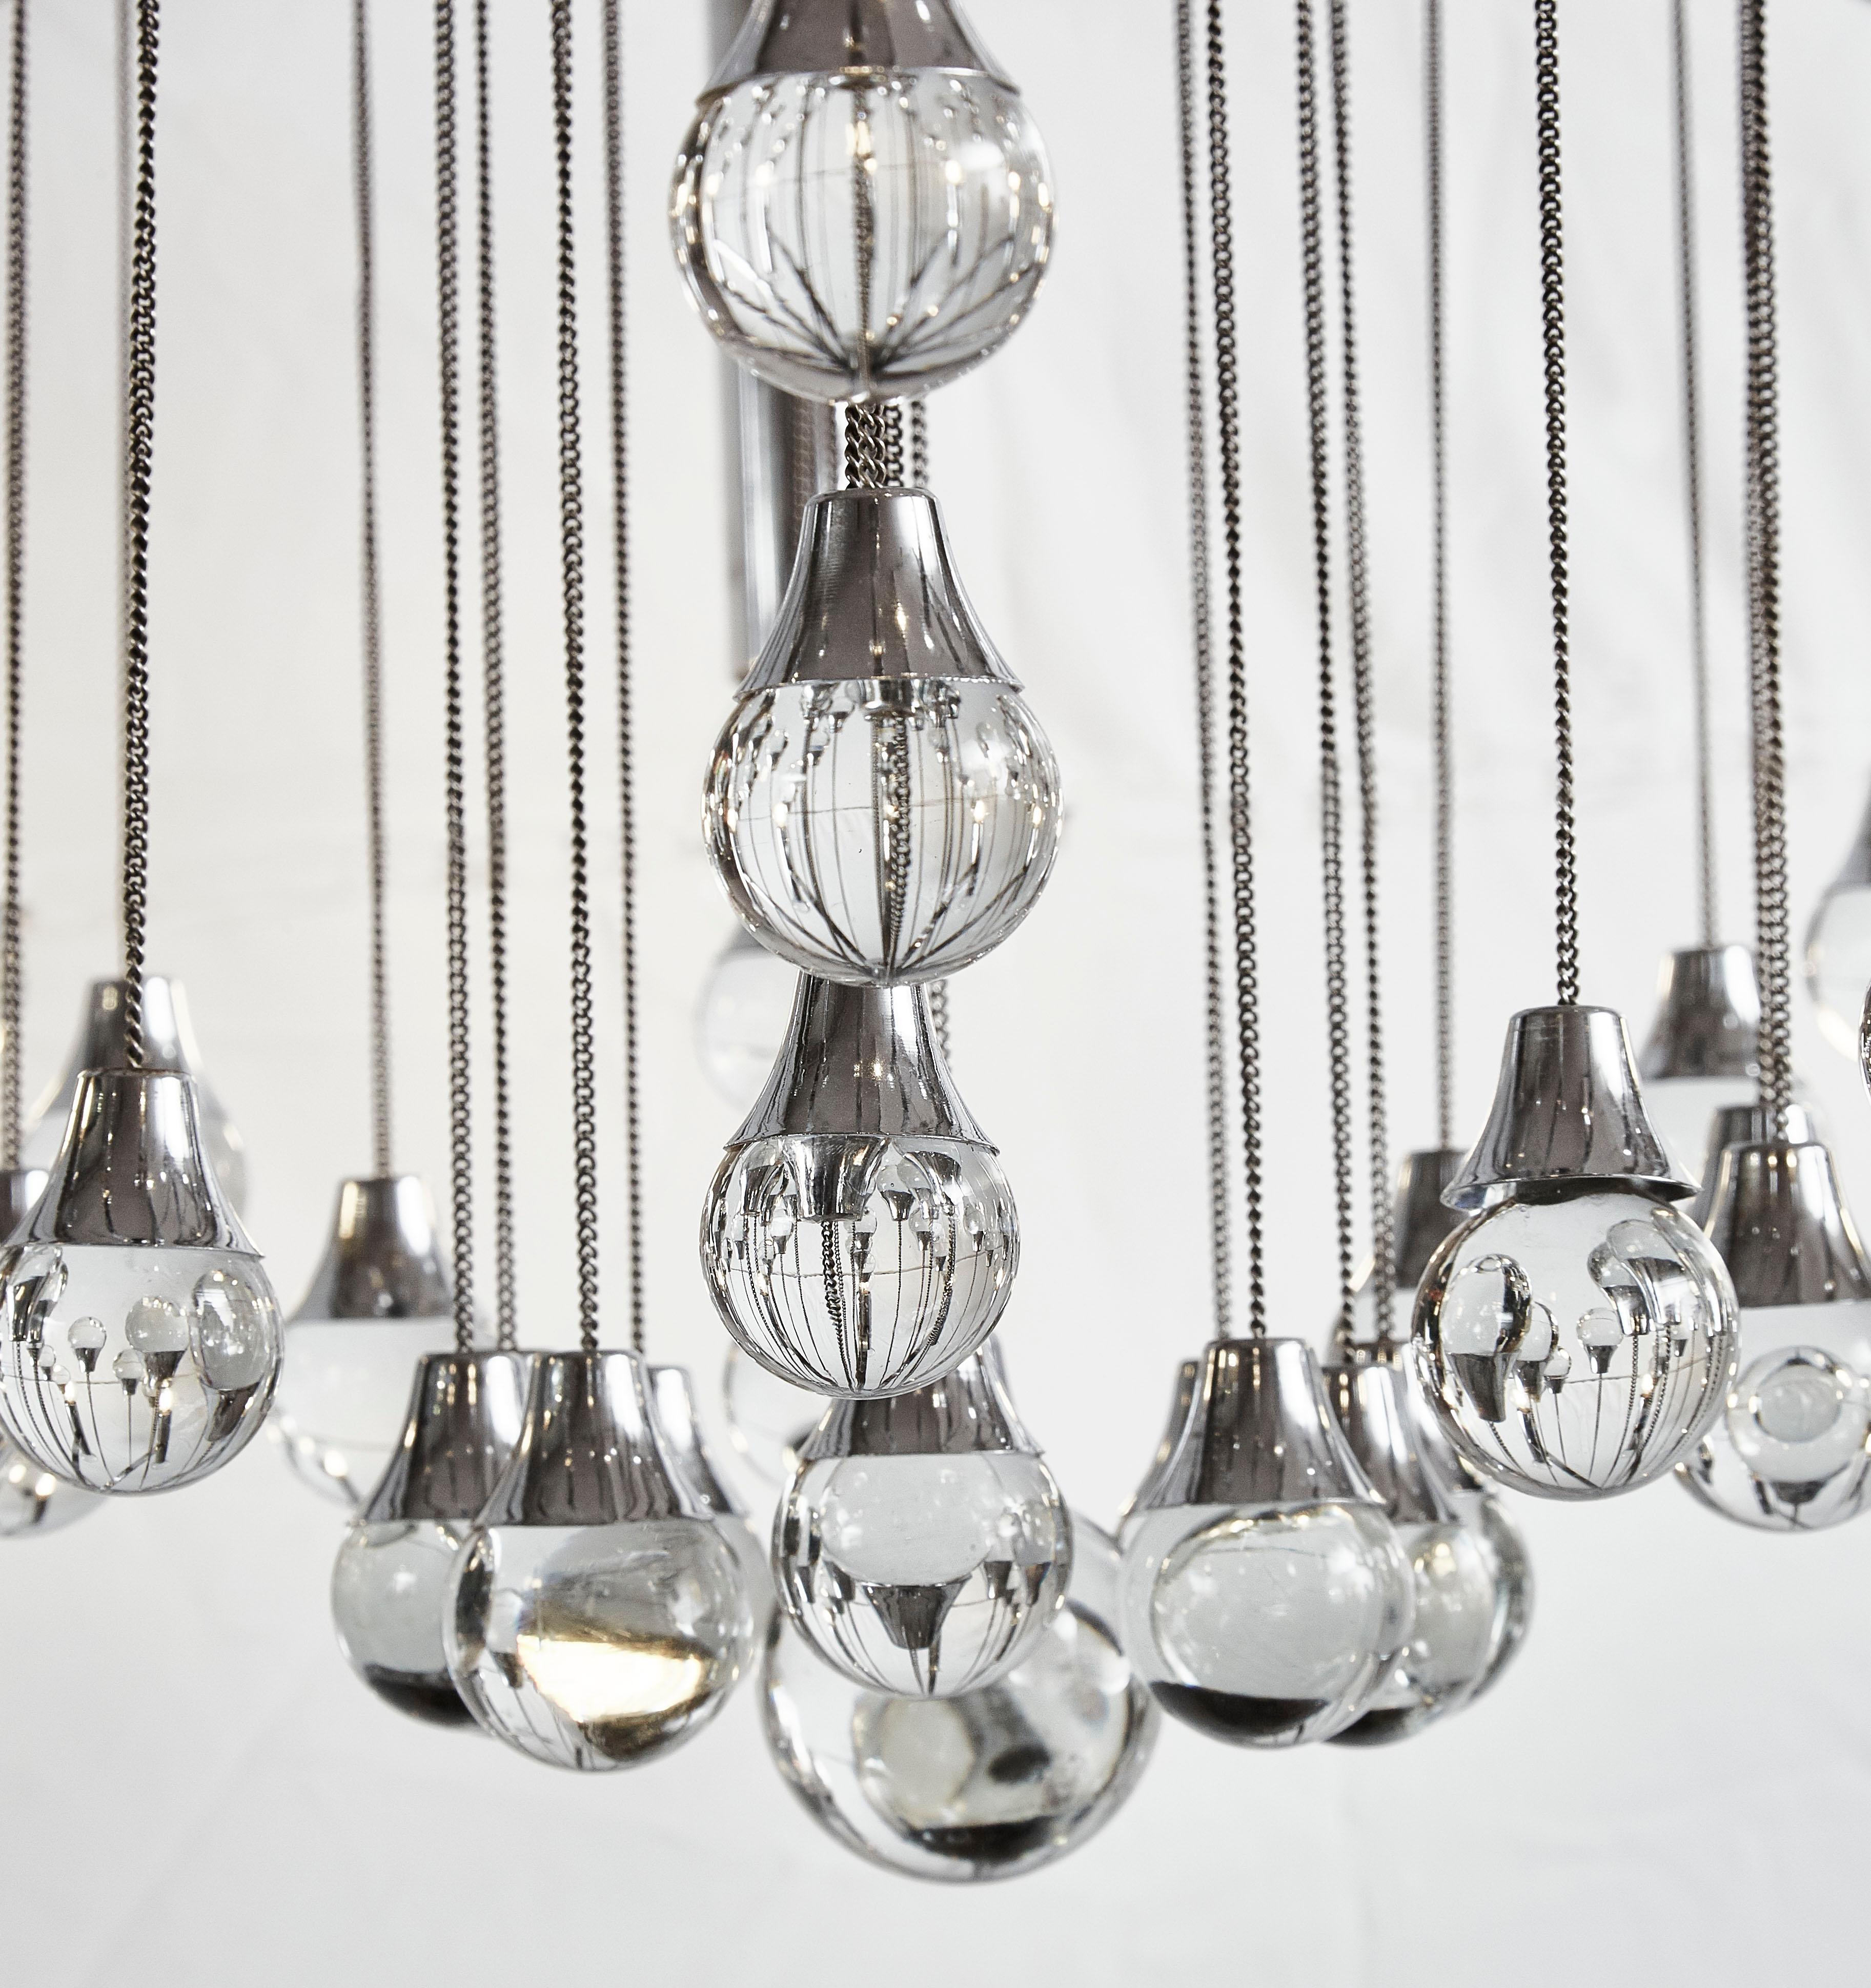 Pair of steel and Murano glass chandeliers designed by Gaetano Sciolari (1927-1994).